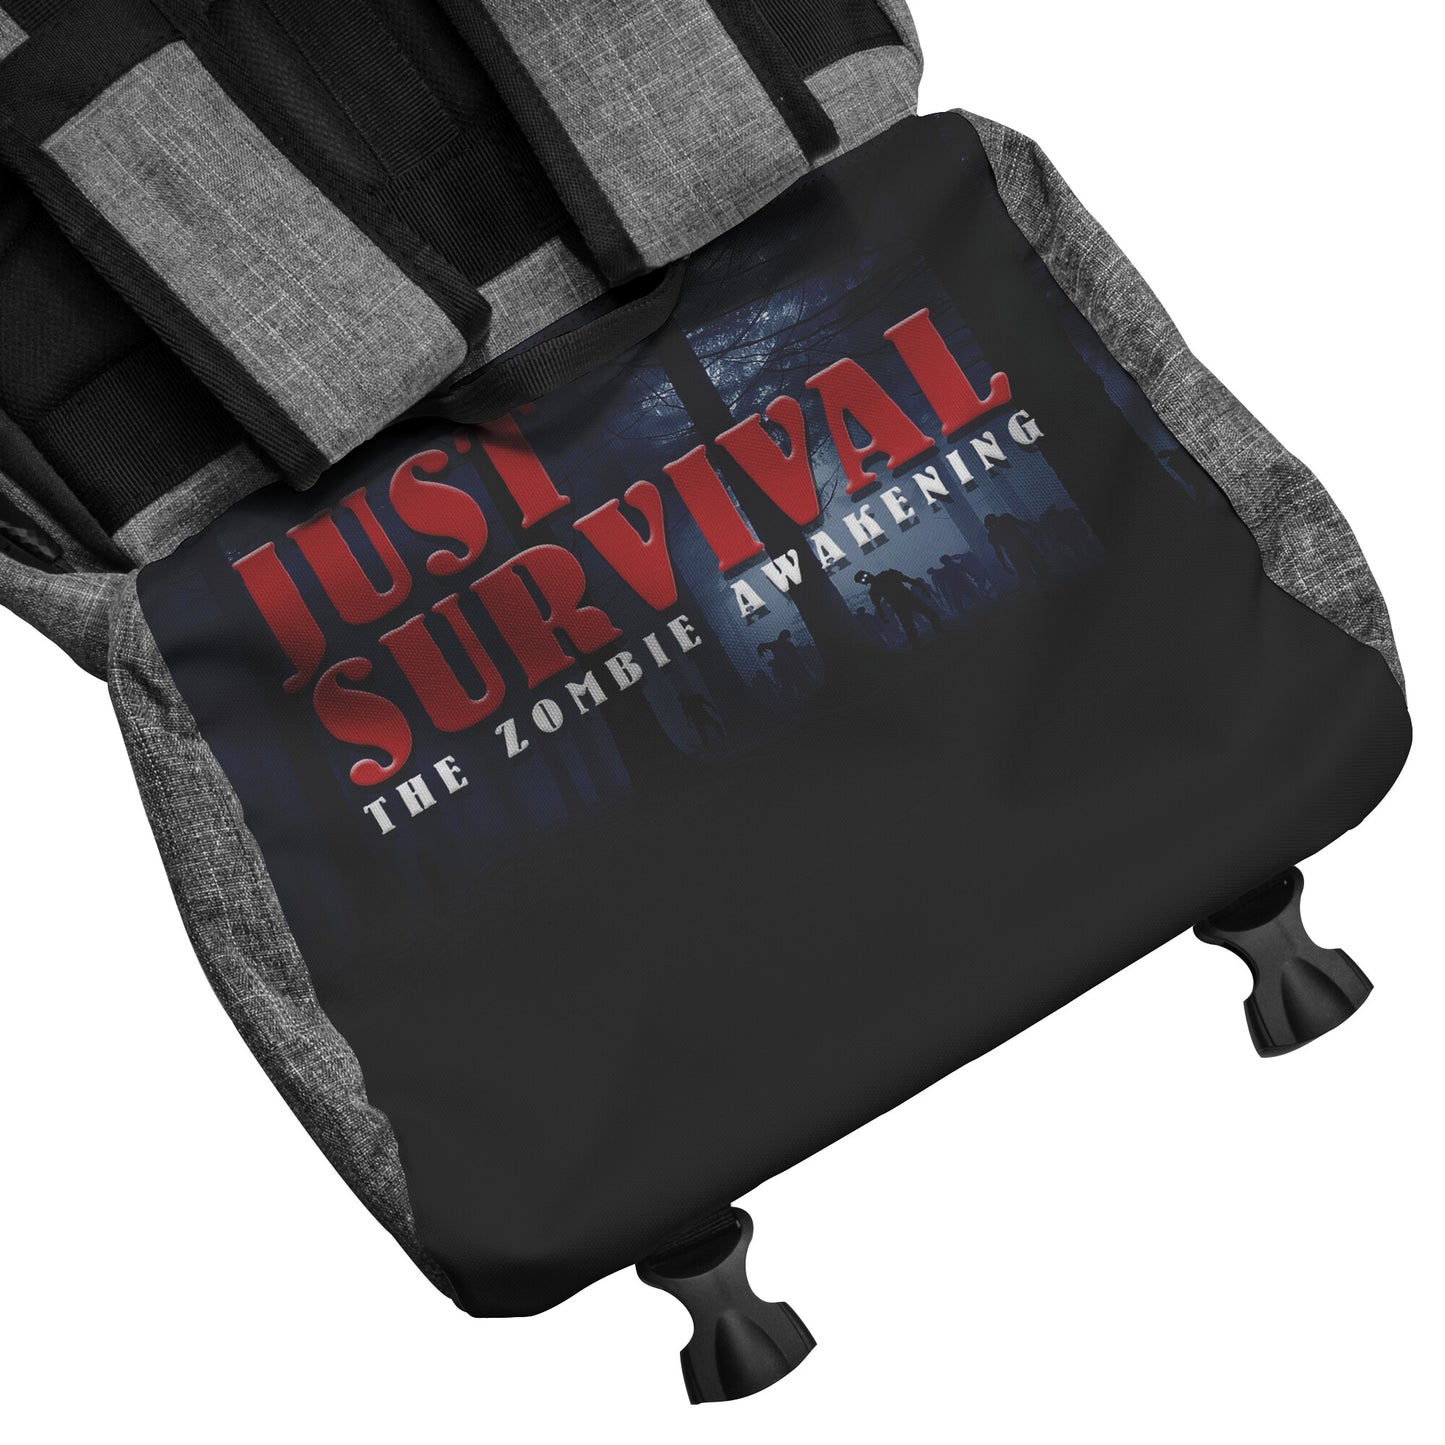 Just Survival The Zombie Awakening | Awakening Games Entertainment Survival Backpack